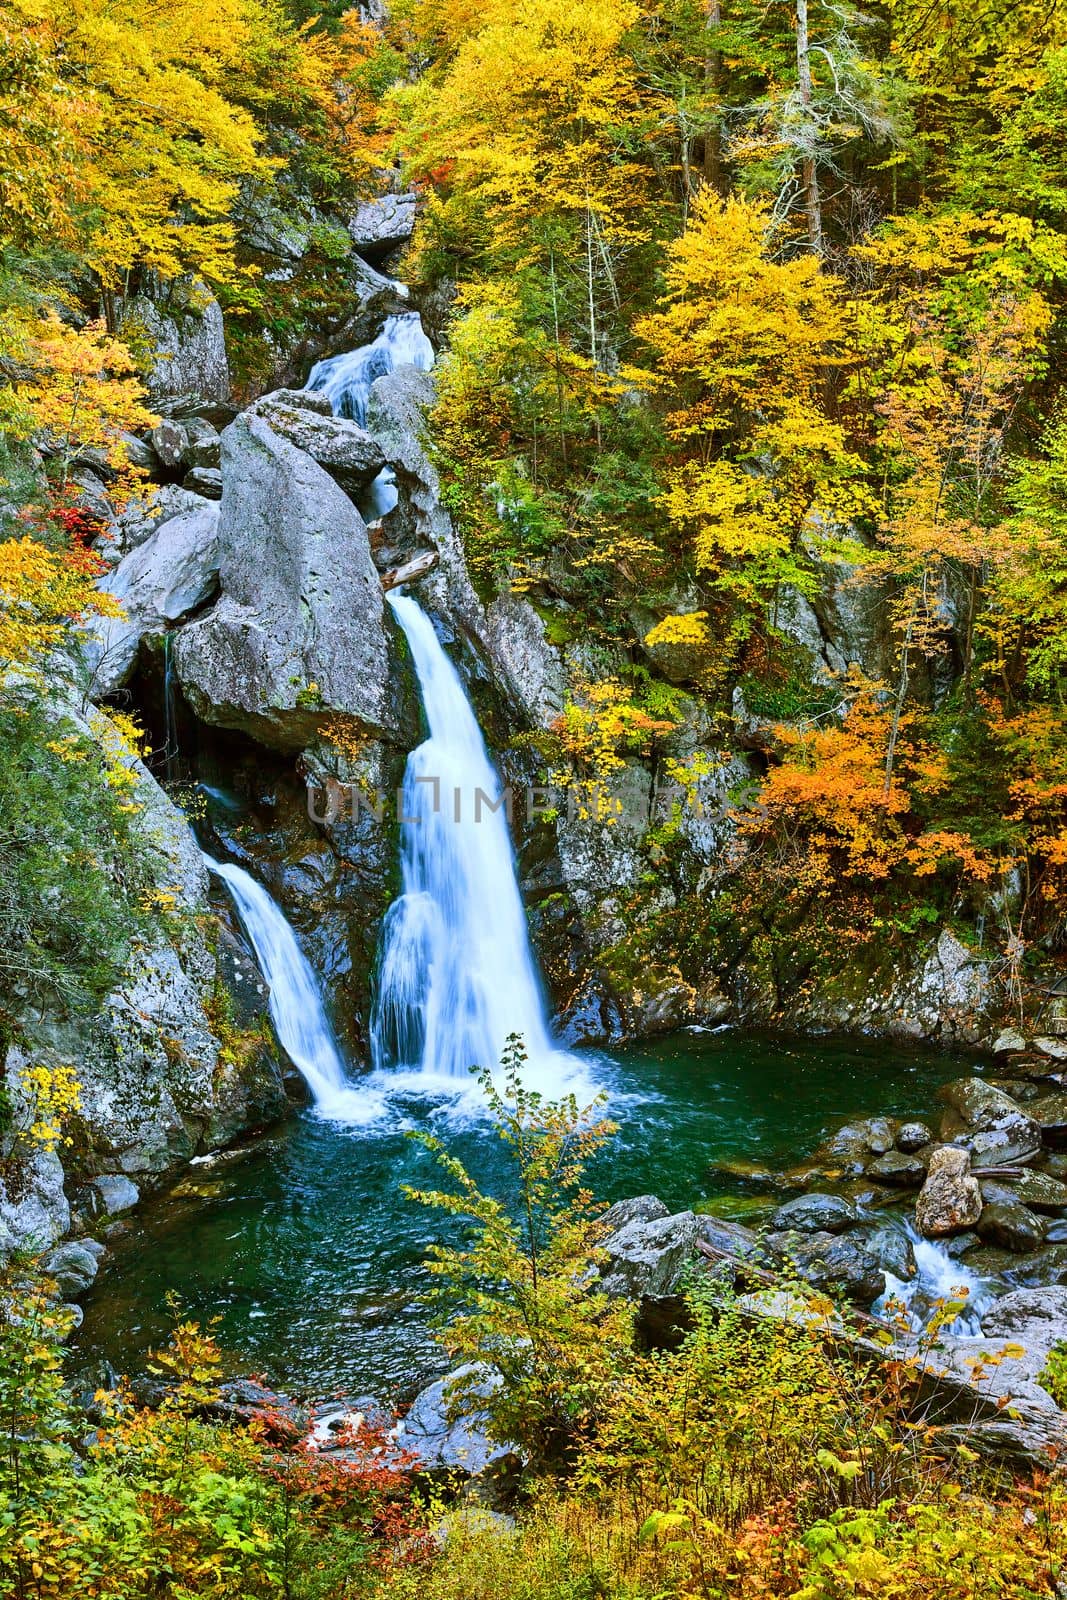 Image of Stunning Upstate New York waterfall surrounded by yellow fall foliage